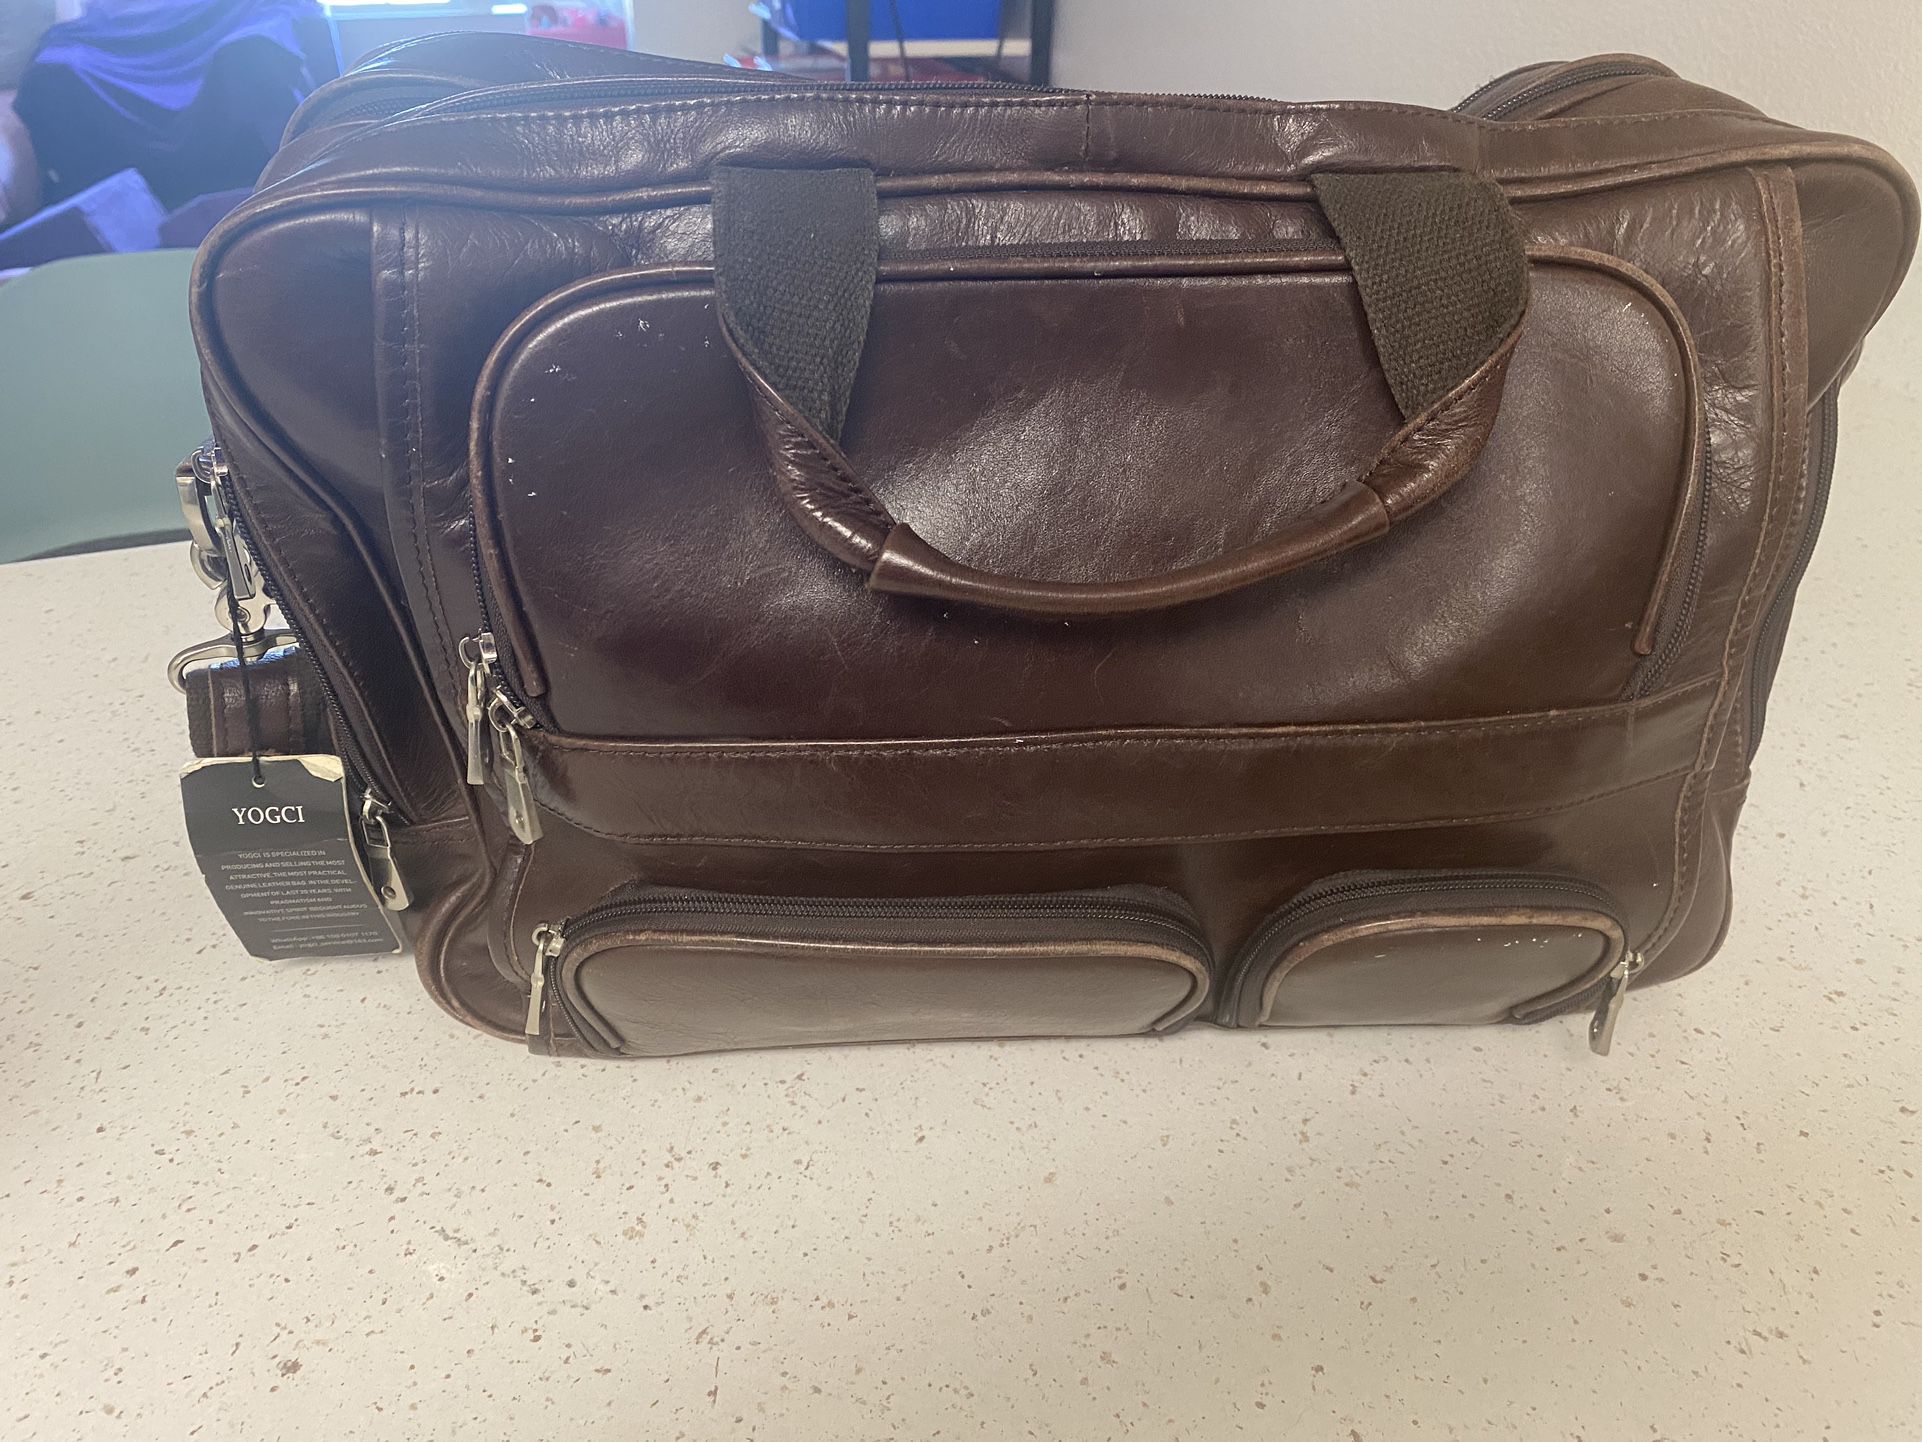 Yogci Leather Messenger Bag/ Laptop $10